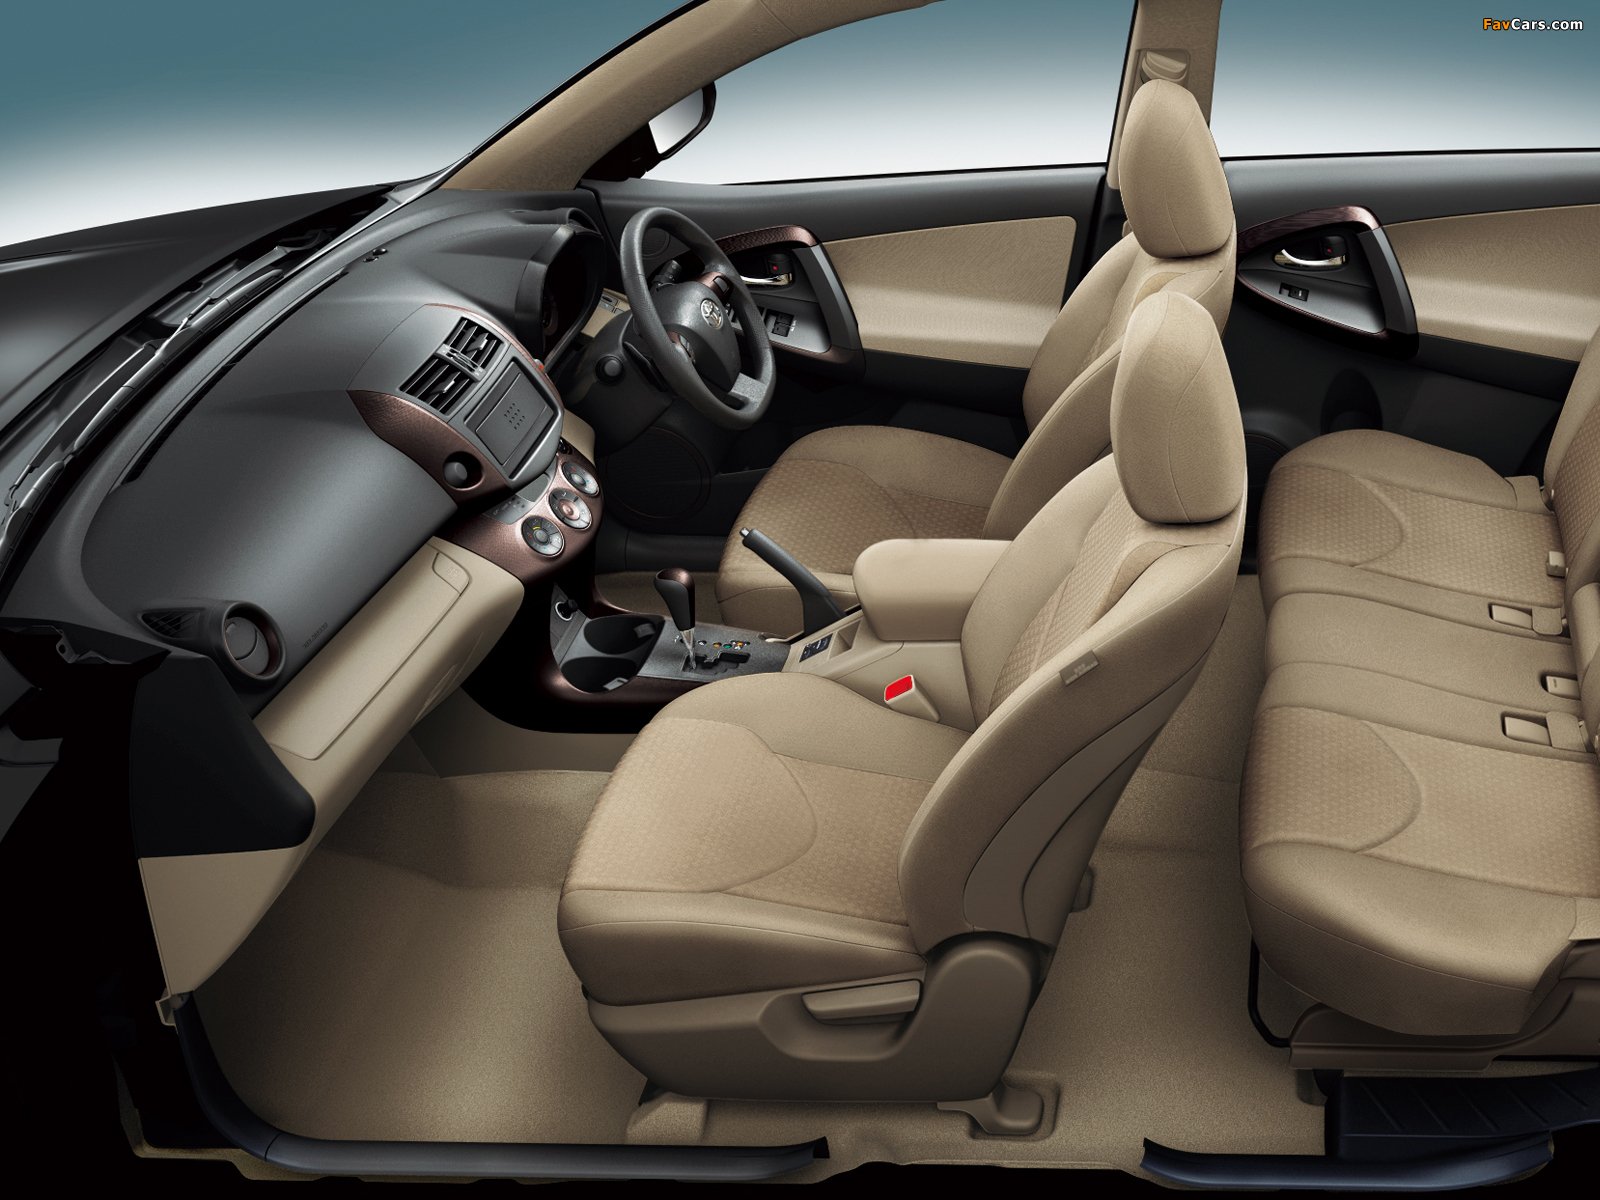 Toyota Vanguard interior - Seats